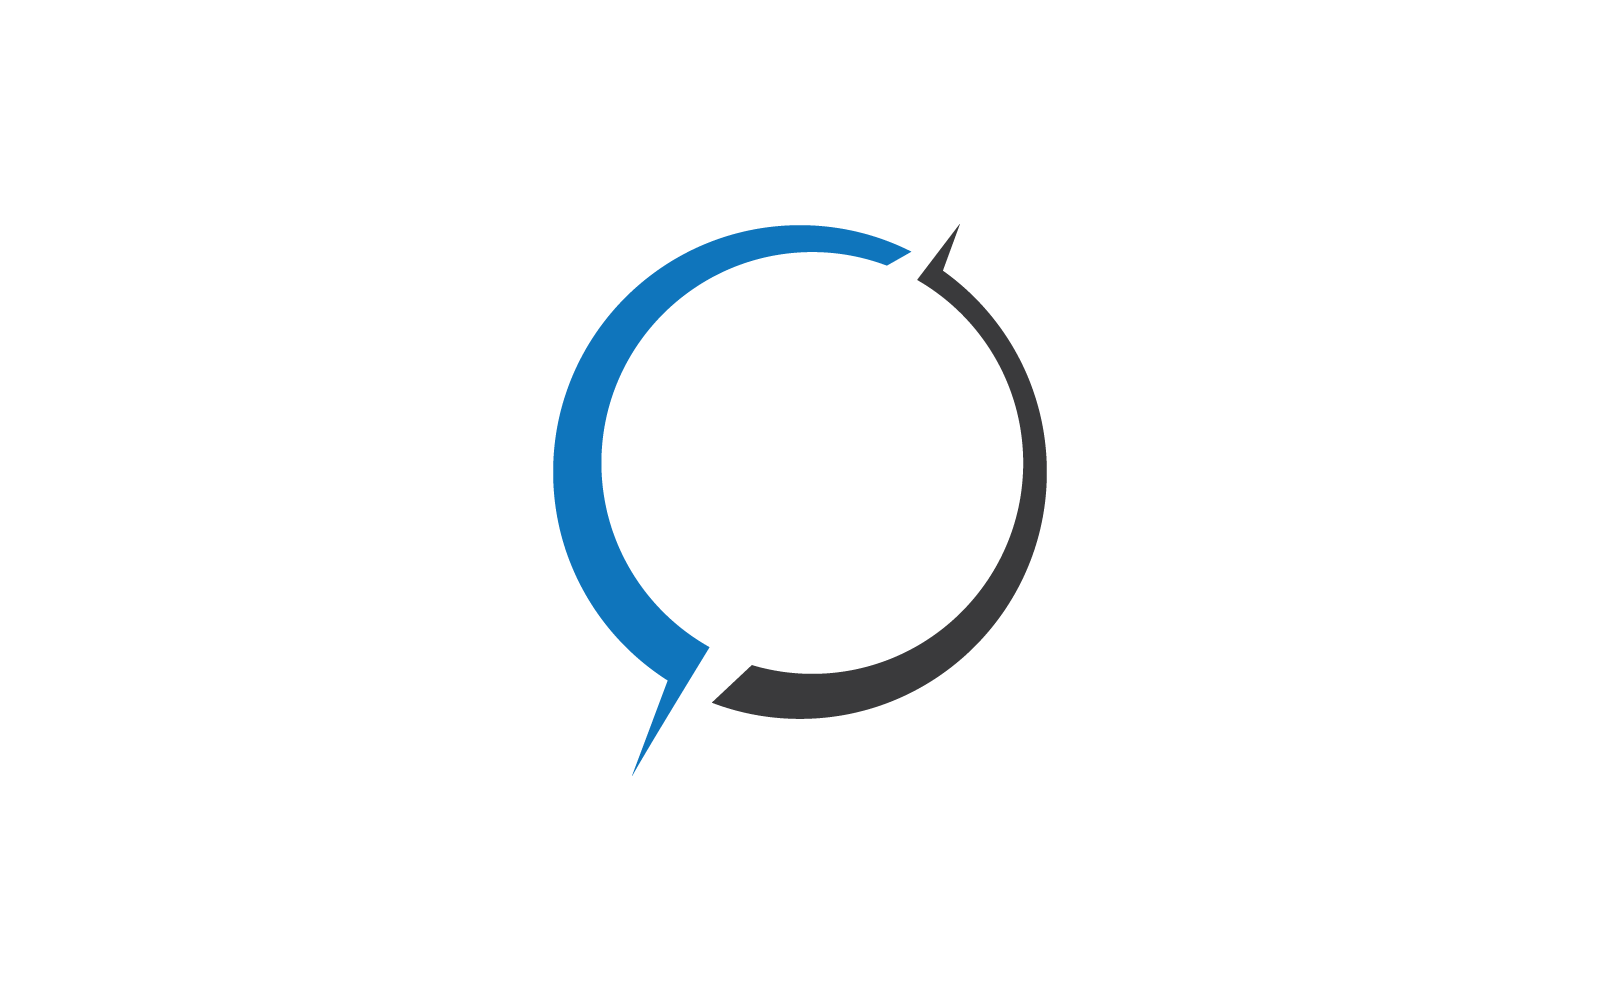 Circle ring logo vector flat design template